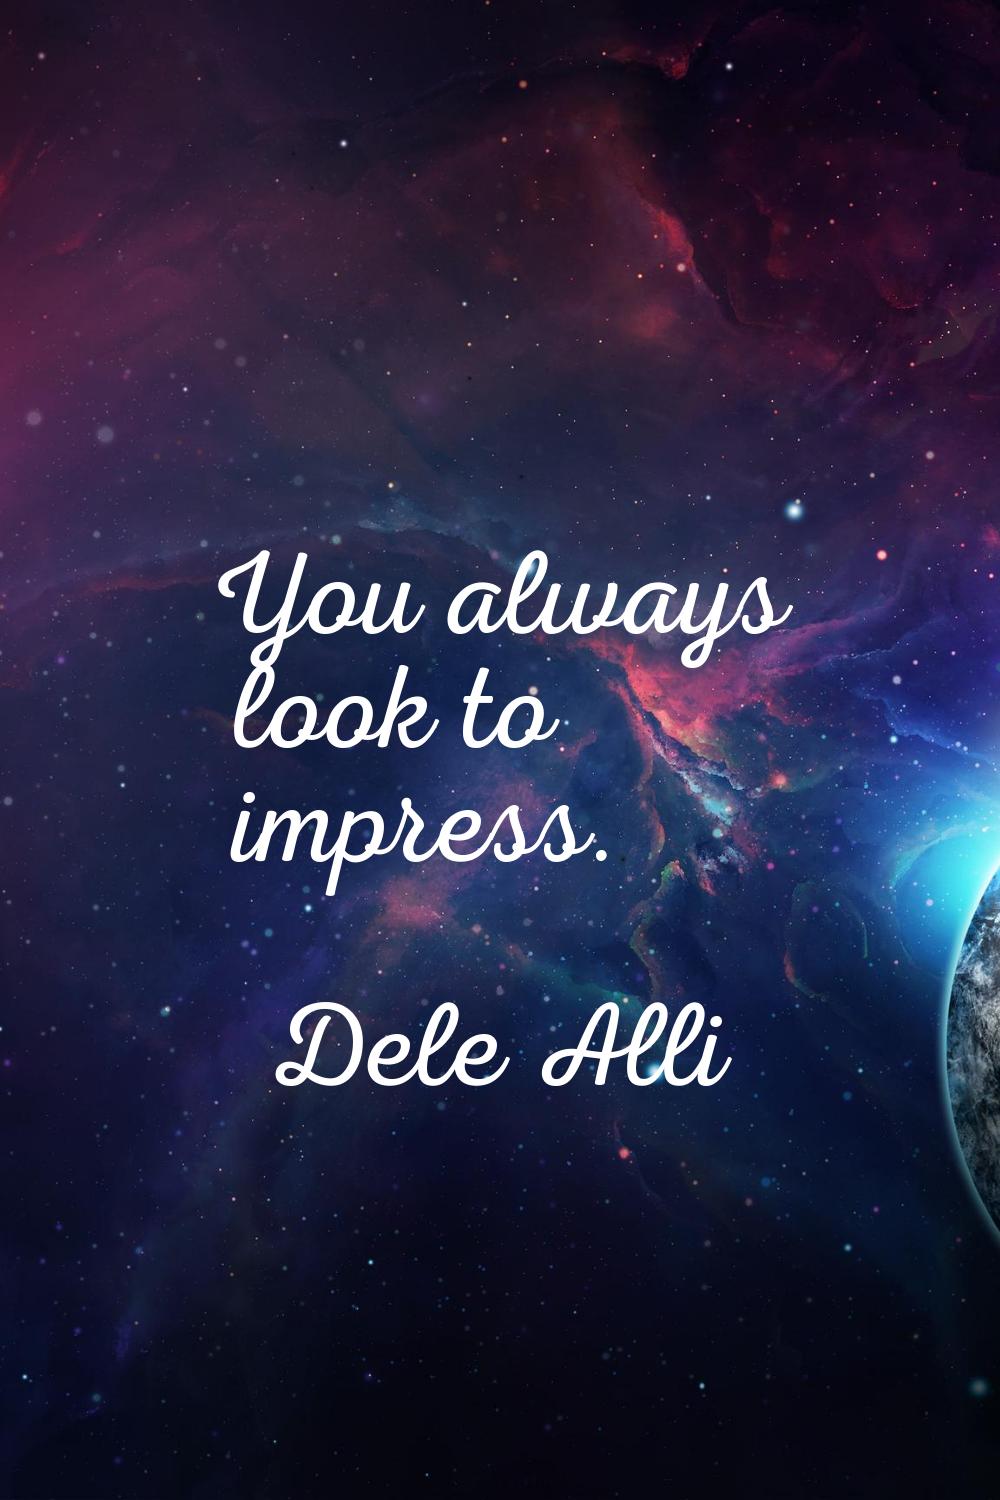 You always look to impress.